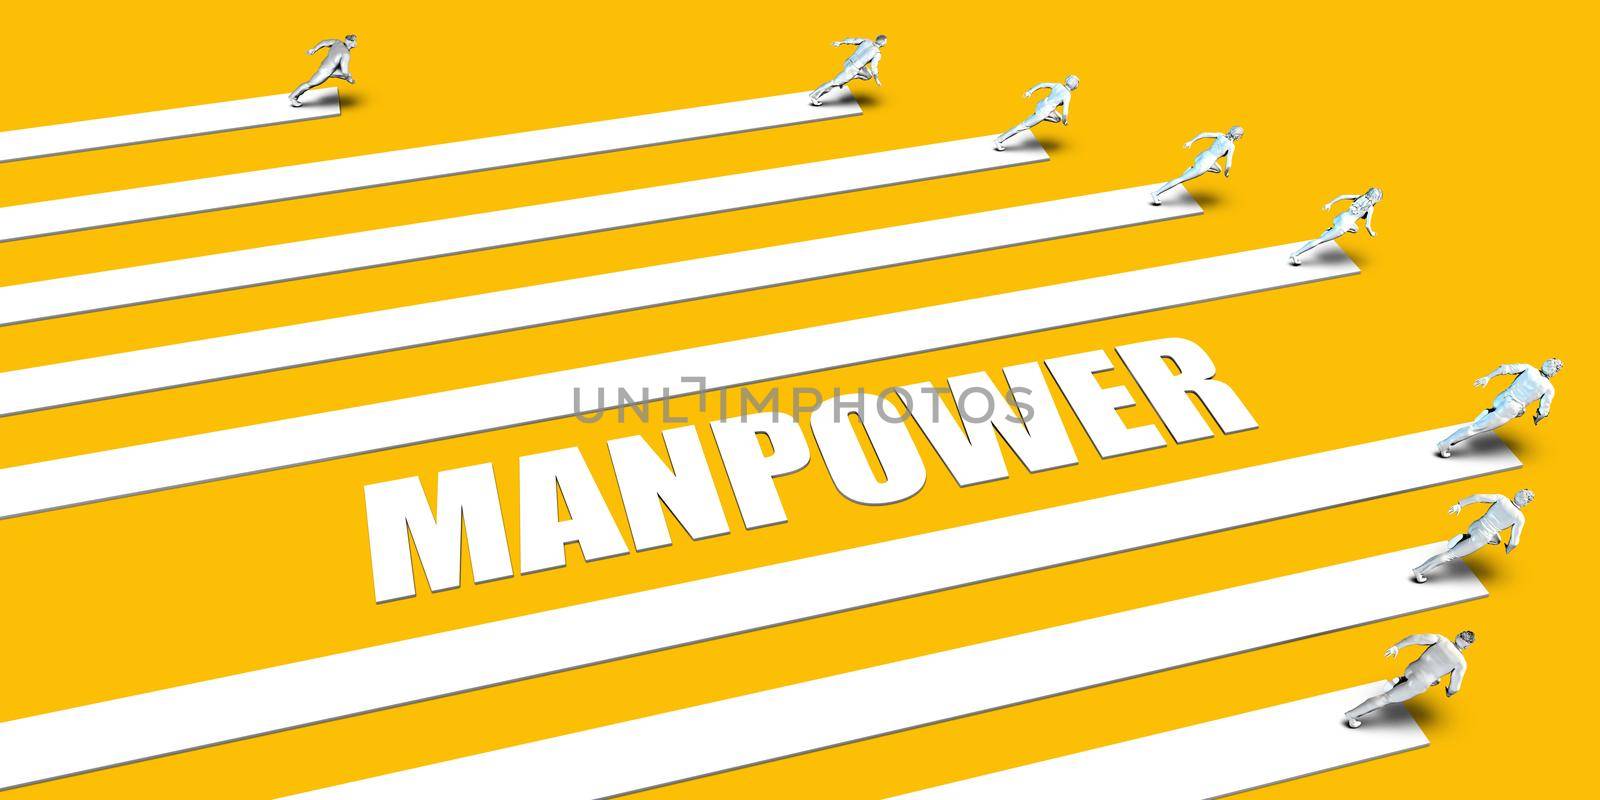 Manpower Concept by kentoh